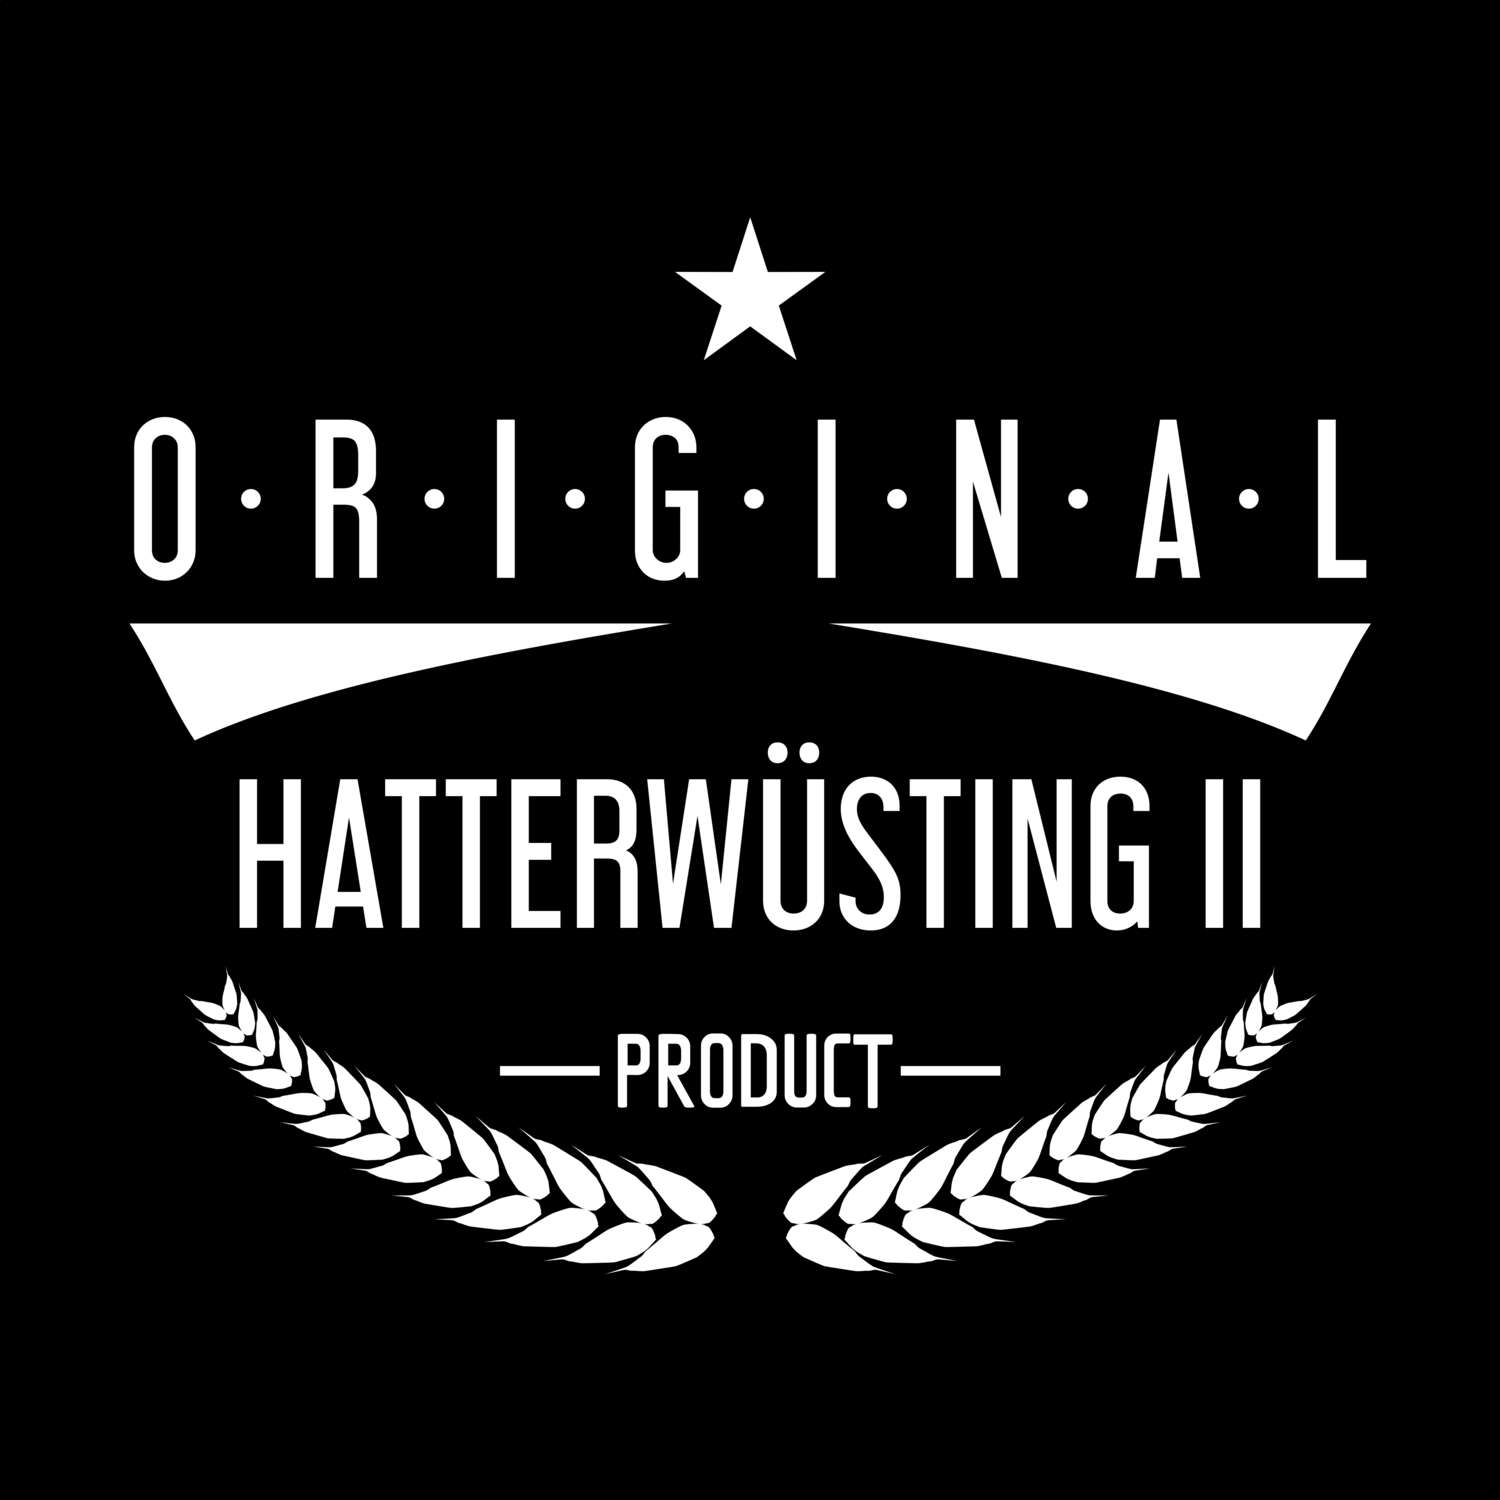 Hatterwüsting II T-Shirt »Original Product«